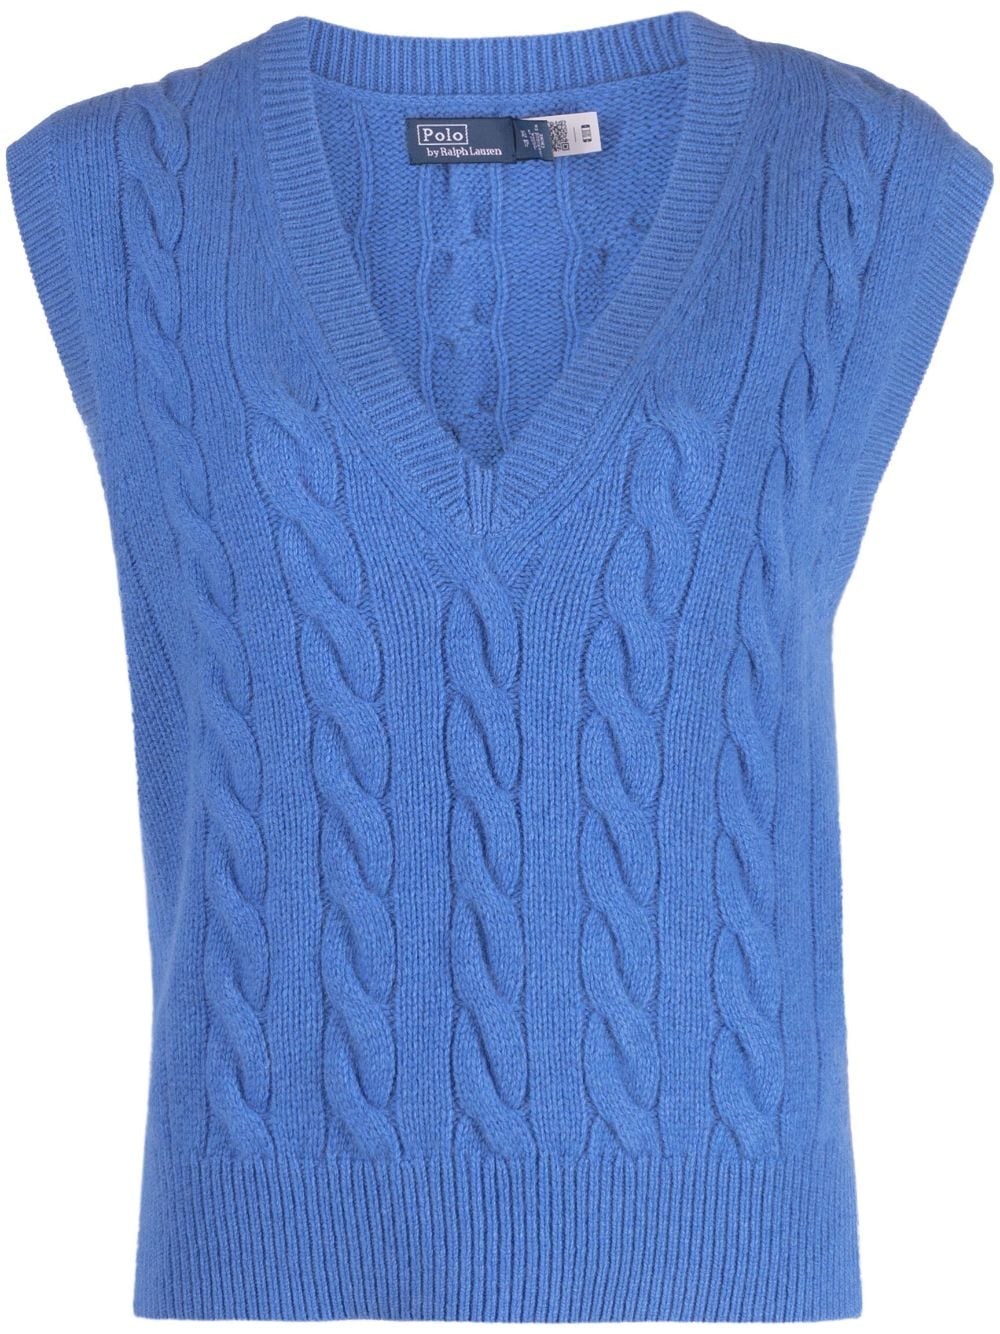 cable-knit sweater vest